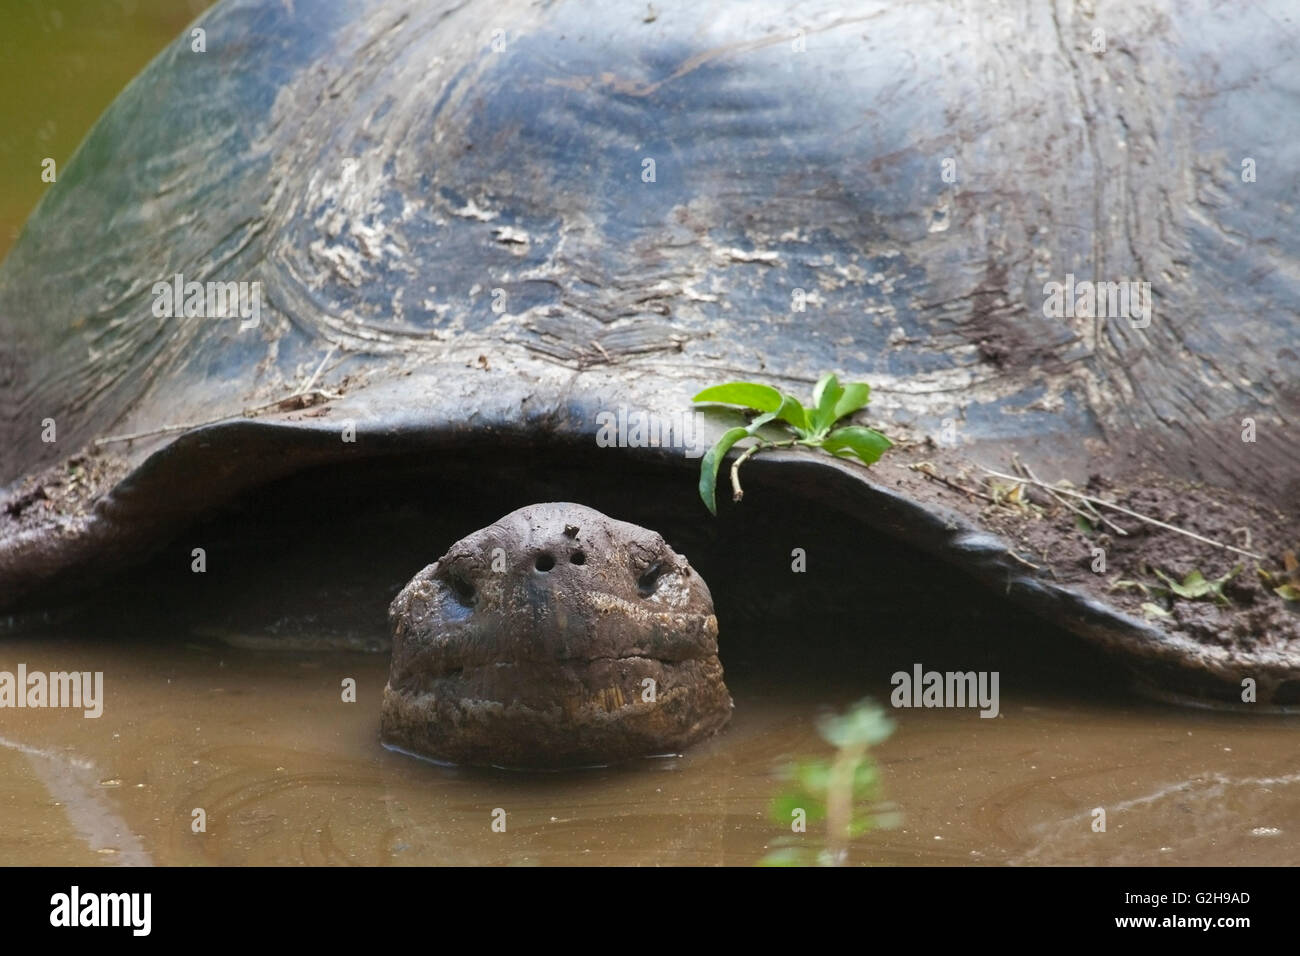 Galapagos Giant Tortoise (Chelonoidis nigra), largest living species of tortoise, wallowing in a muddy bath Stock Photo